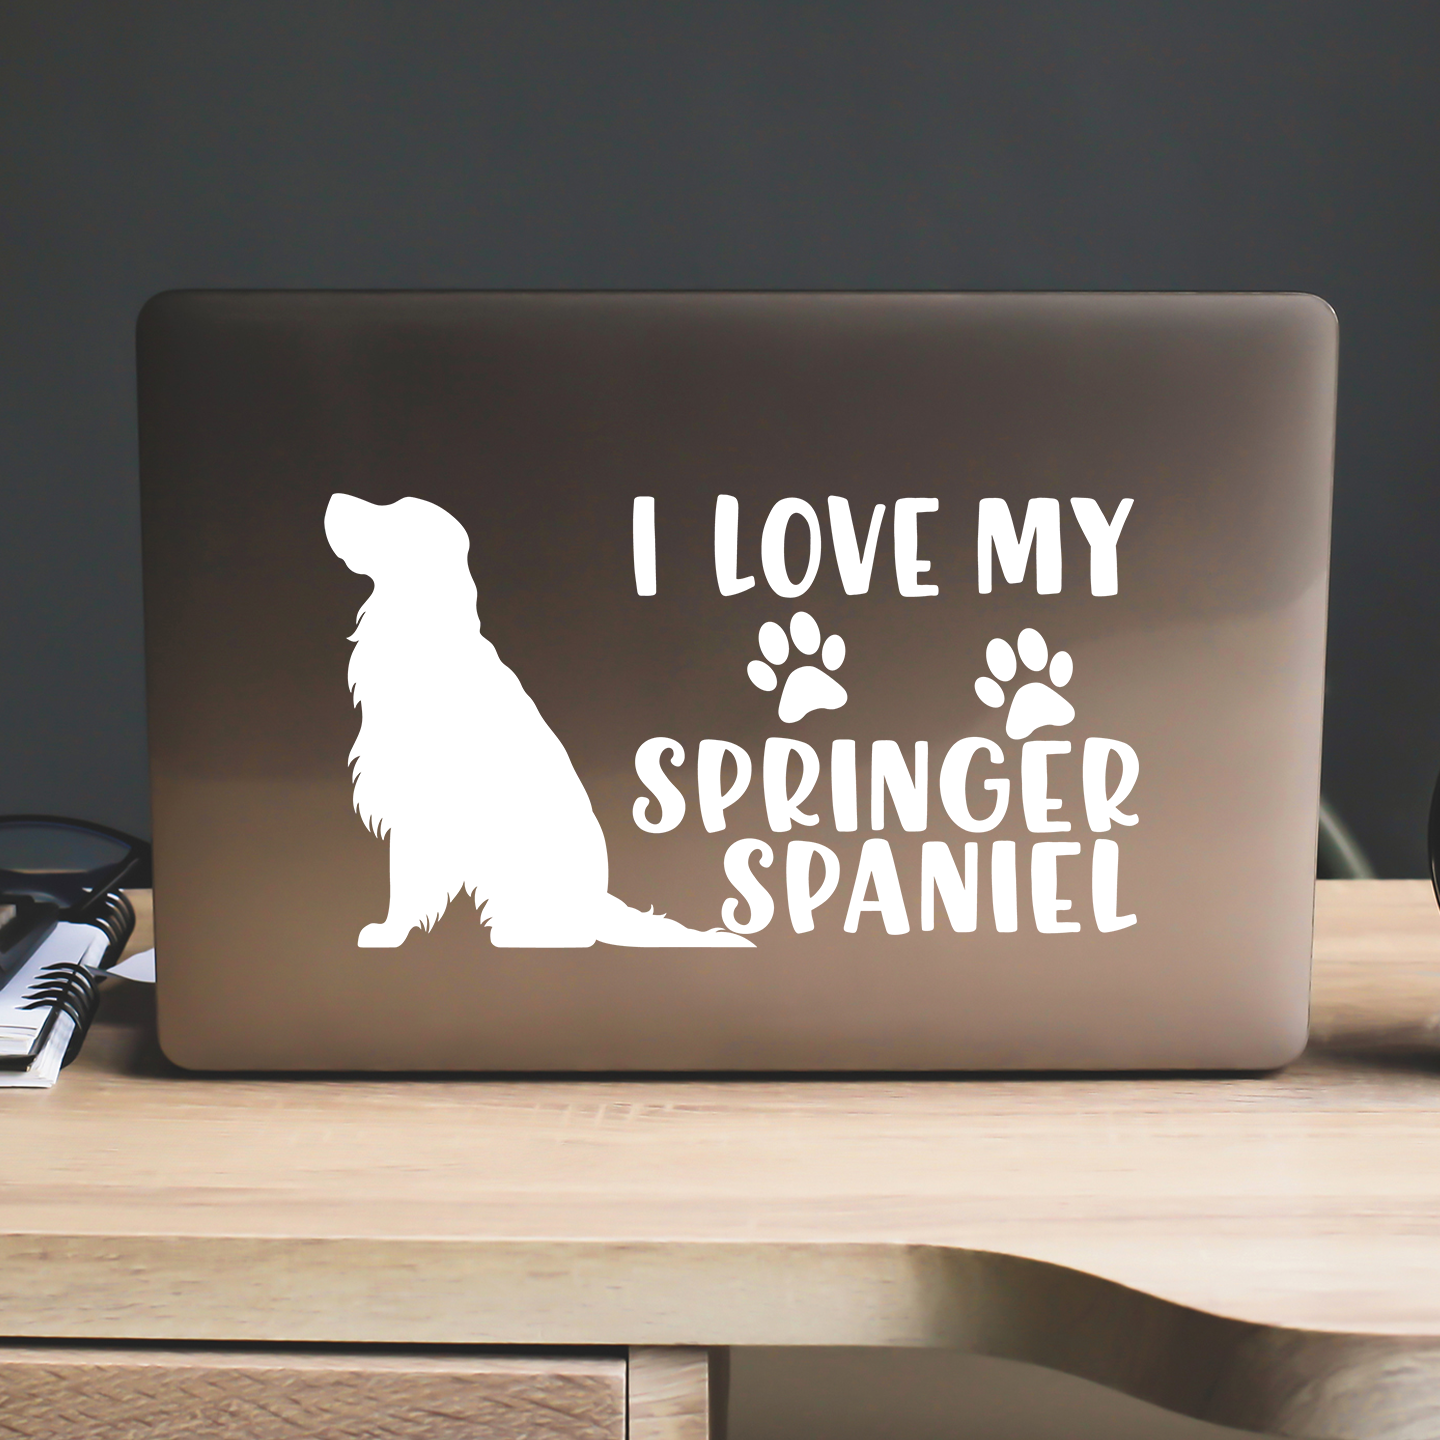 I Love My Springer Spaniel Sticker